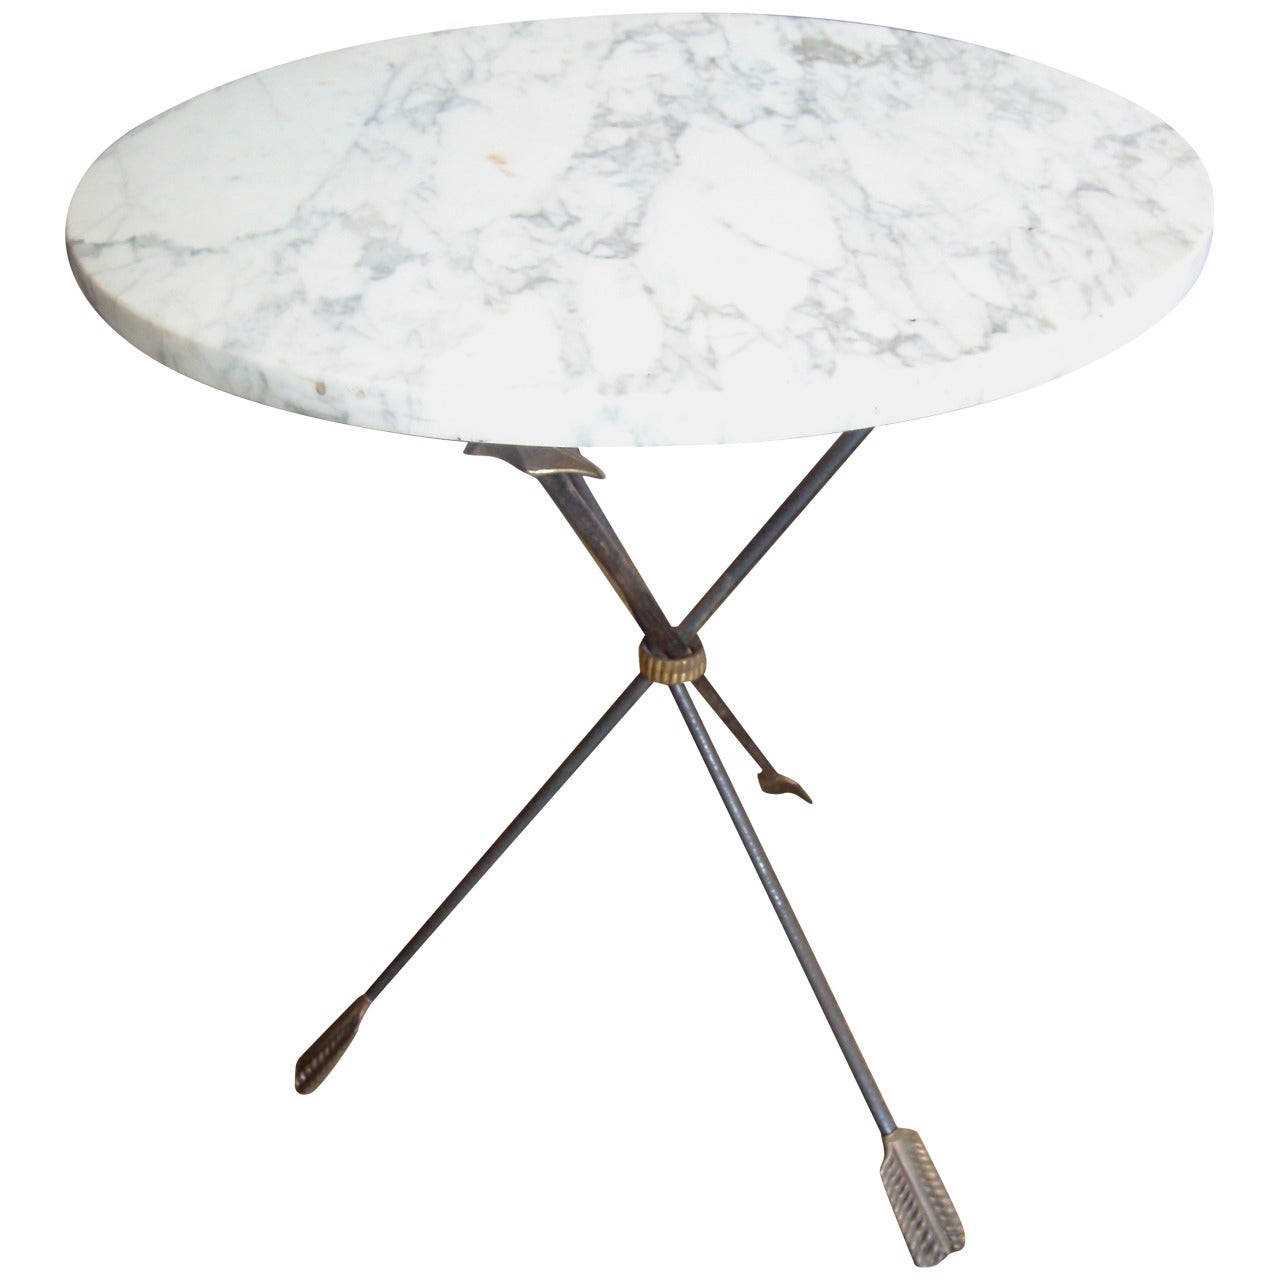 Italian Iron, Brass and Marble Table Gueridon with Tripod base, Gio Ponti Style